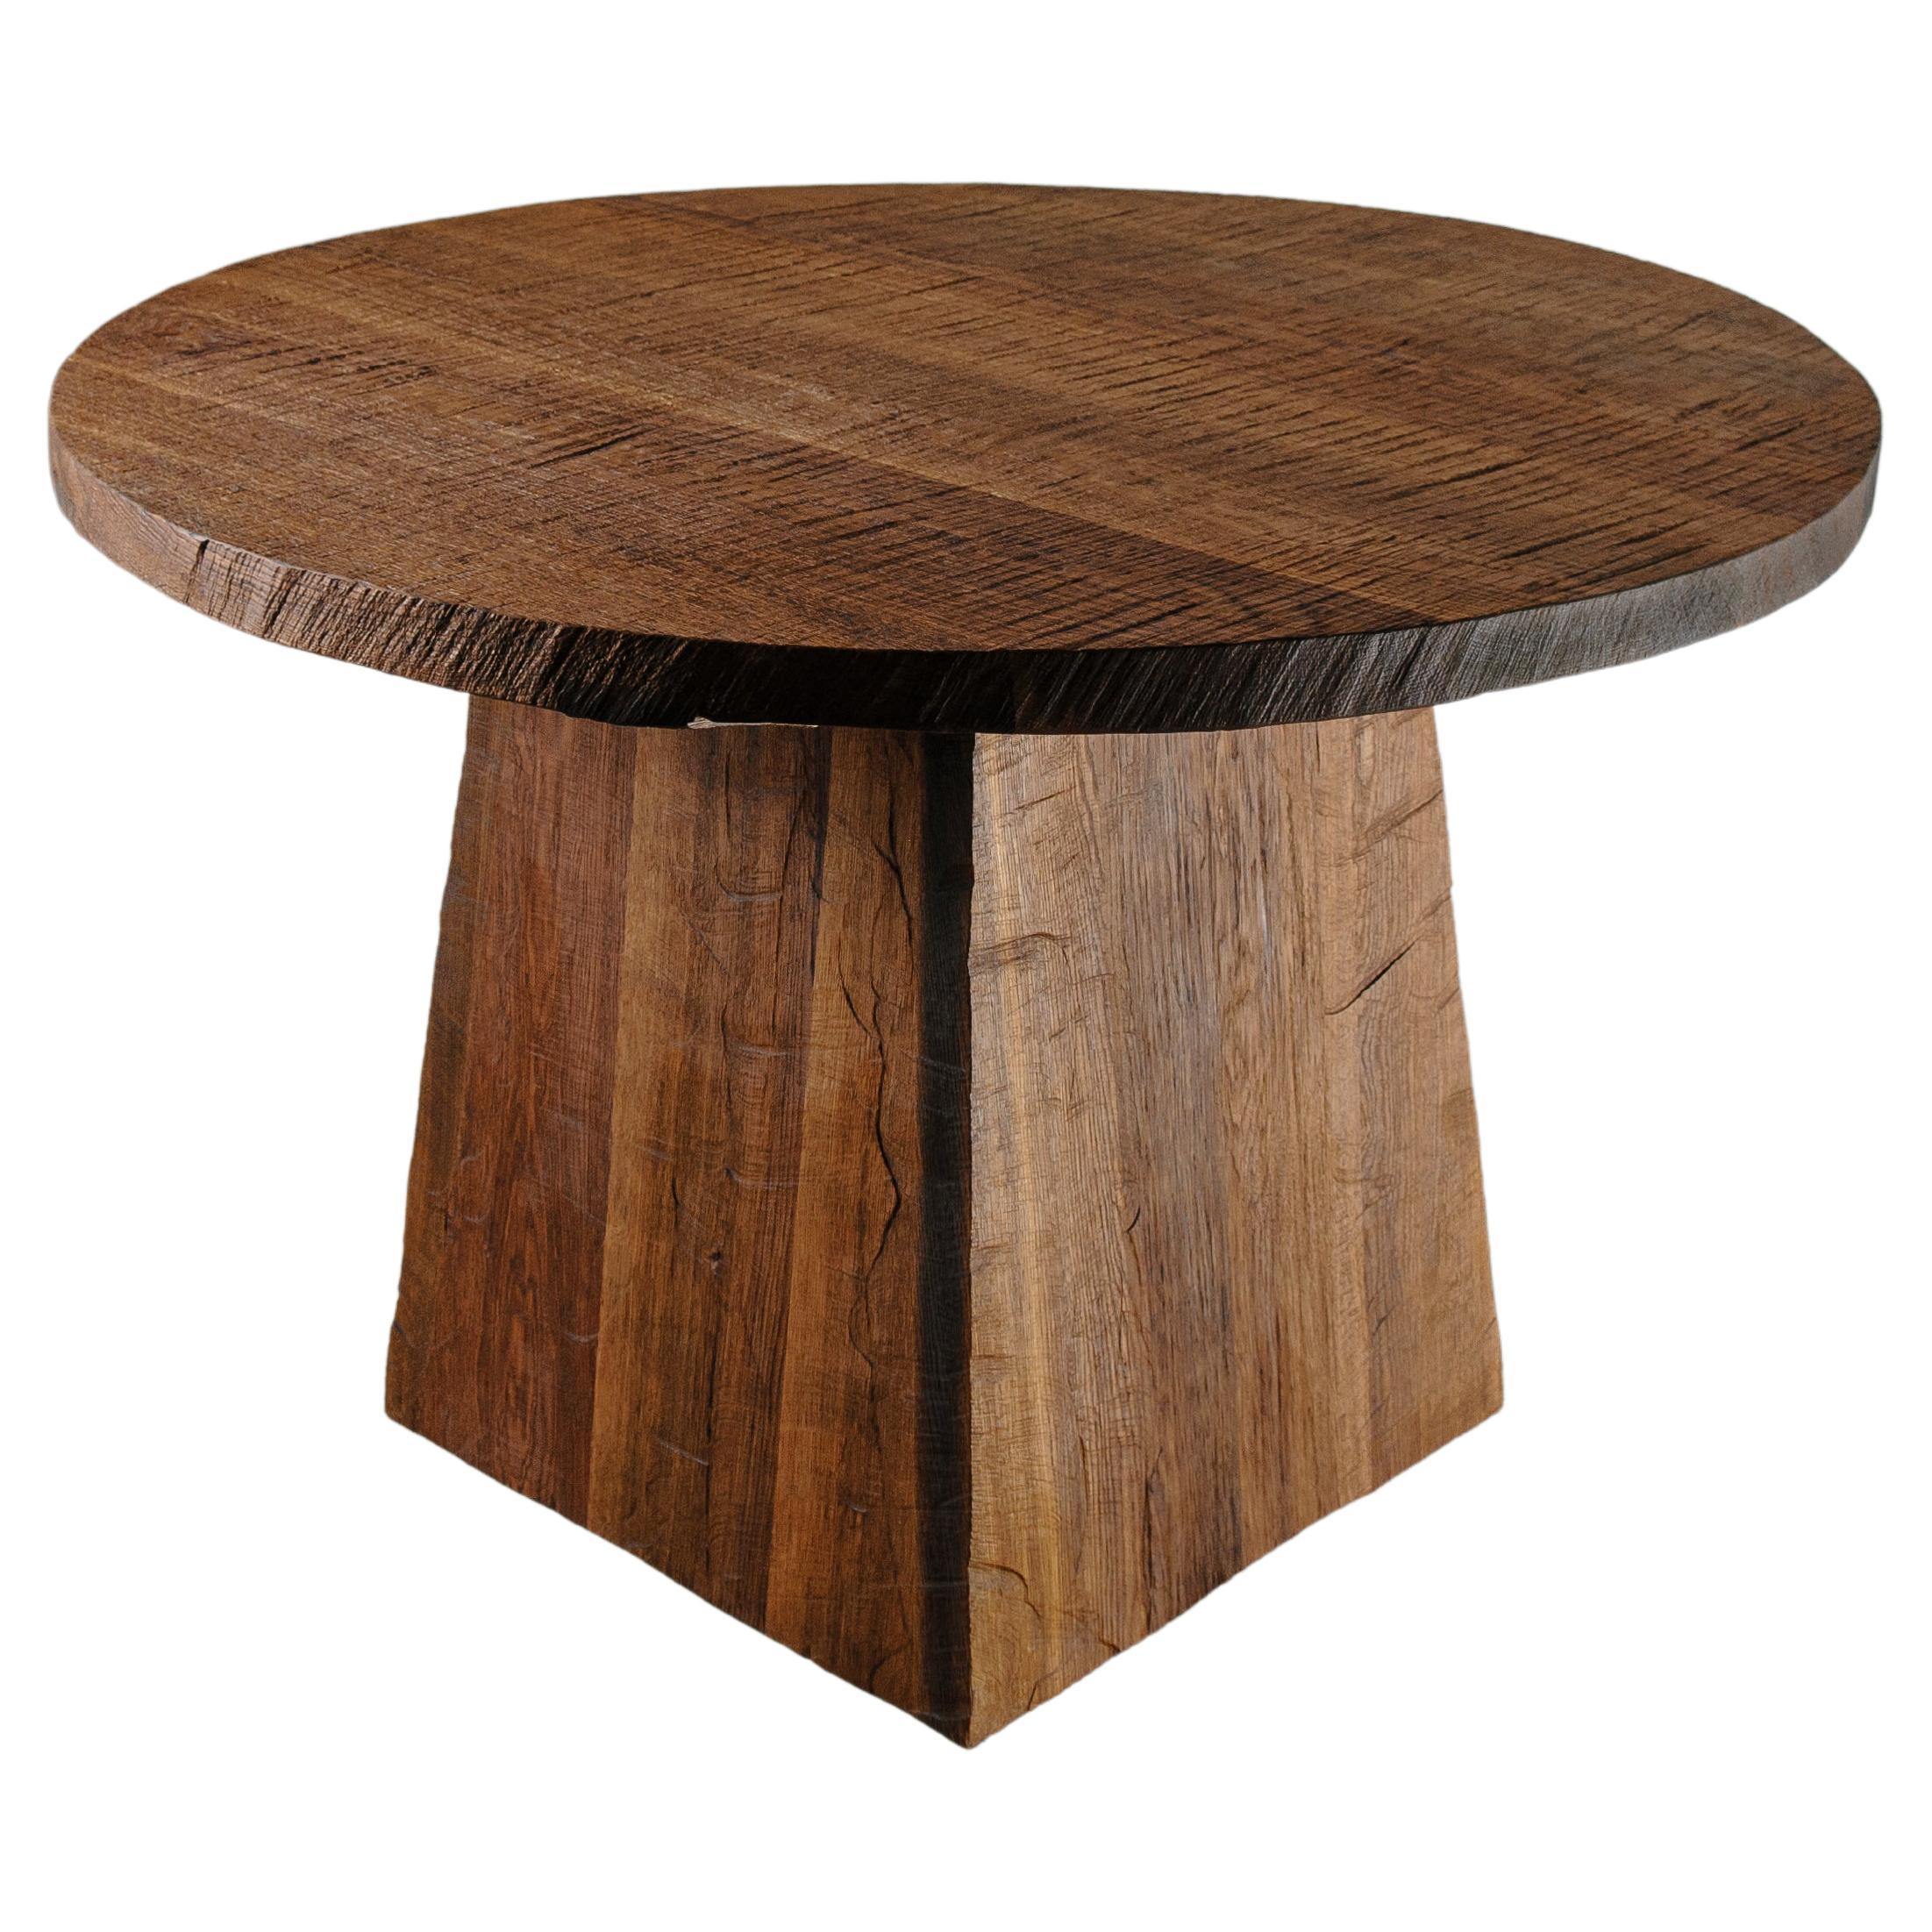 Table centrale brutaliste N1 en bois de chêne massif, 160